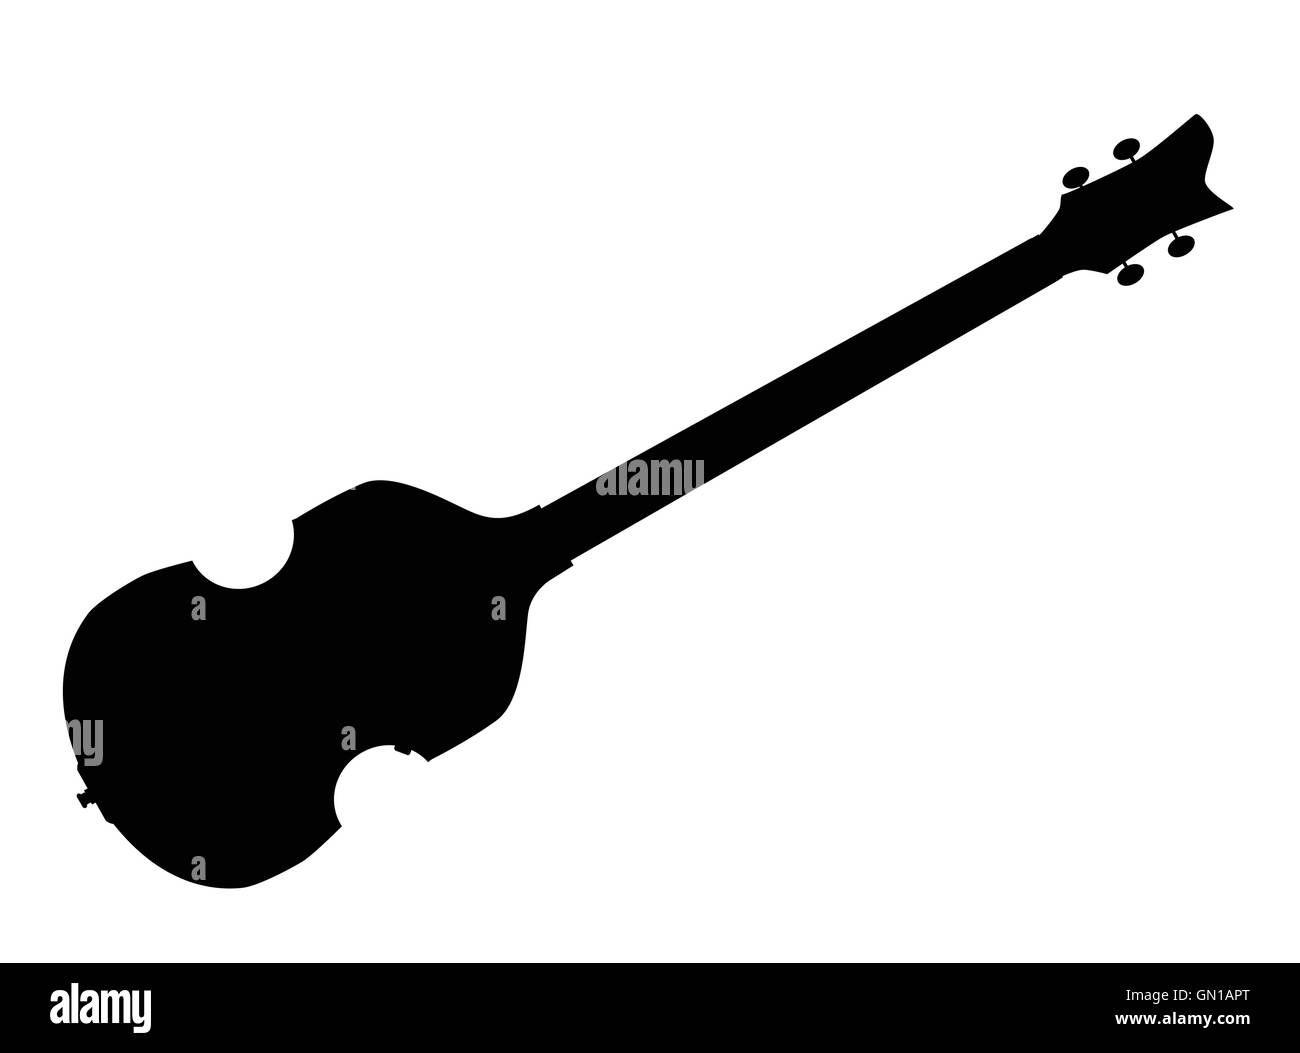 Bass guitar silhouette -Fotos und -Bildmaterial in hoher Auflösung – Alamy